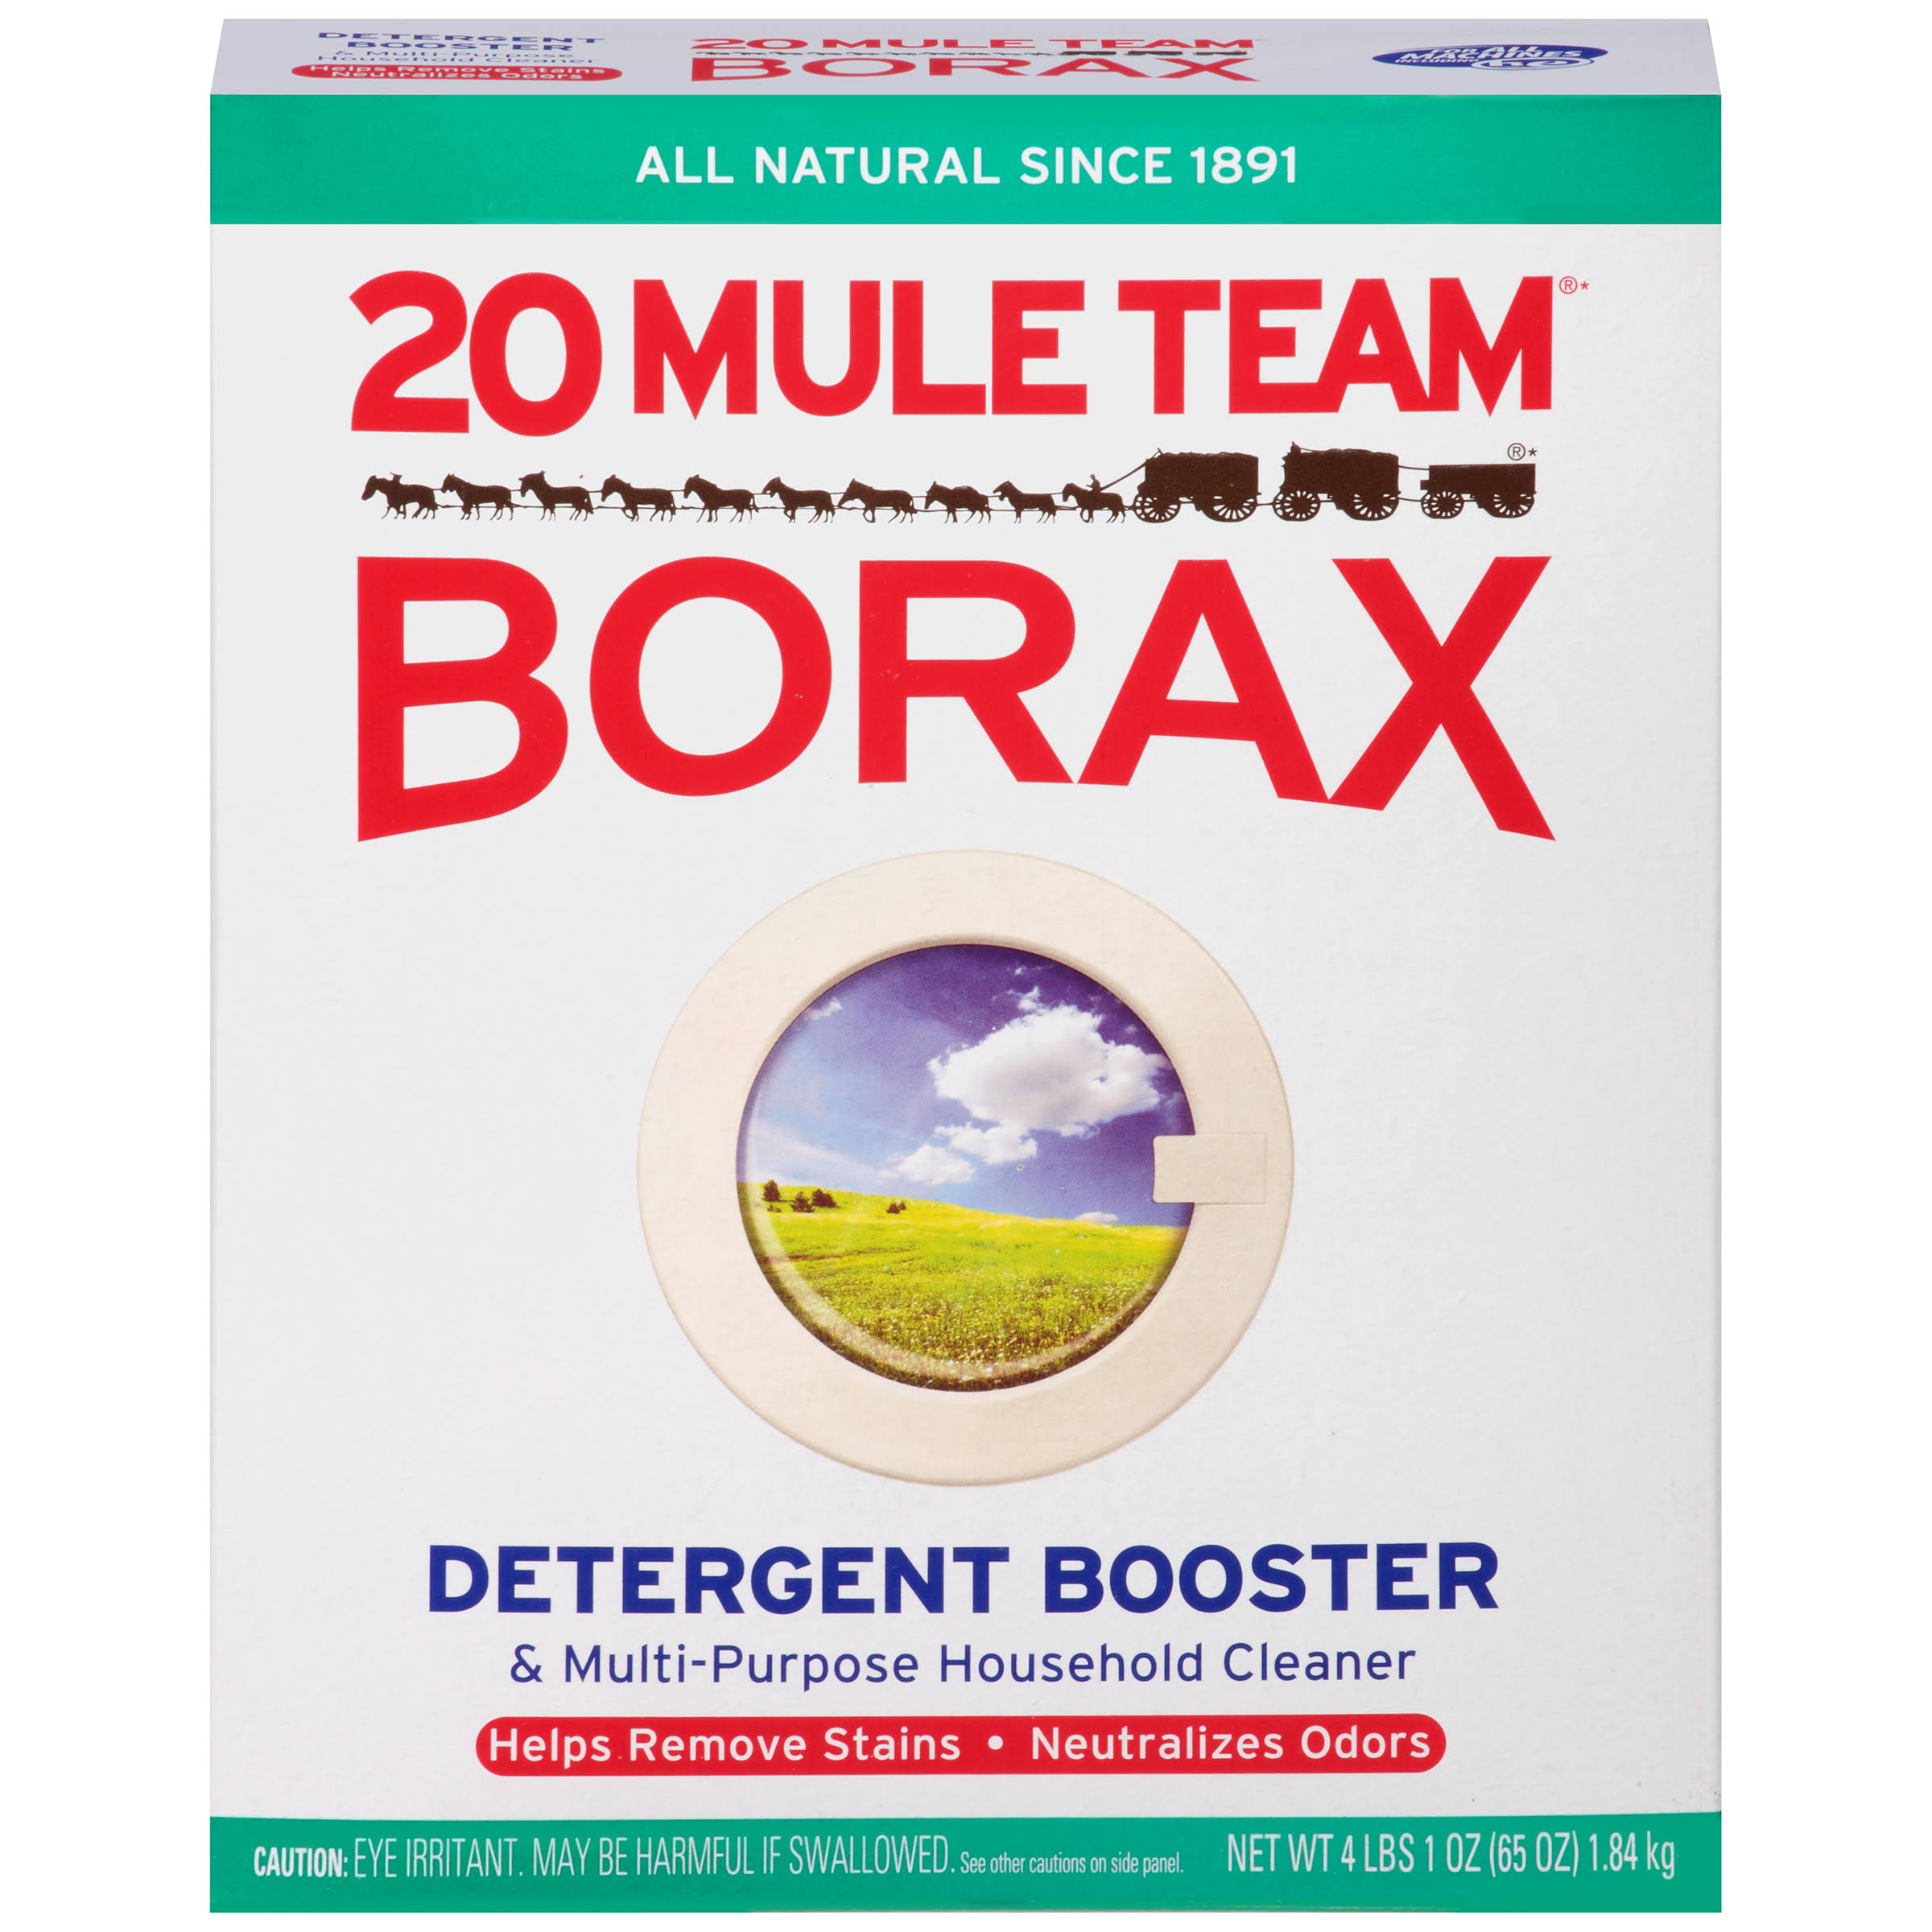 20 Mule Team Borax Detergent Booster & Multi-Purpose Household Cleaner - 76oz